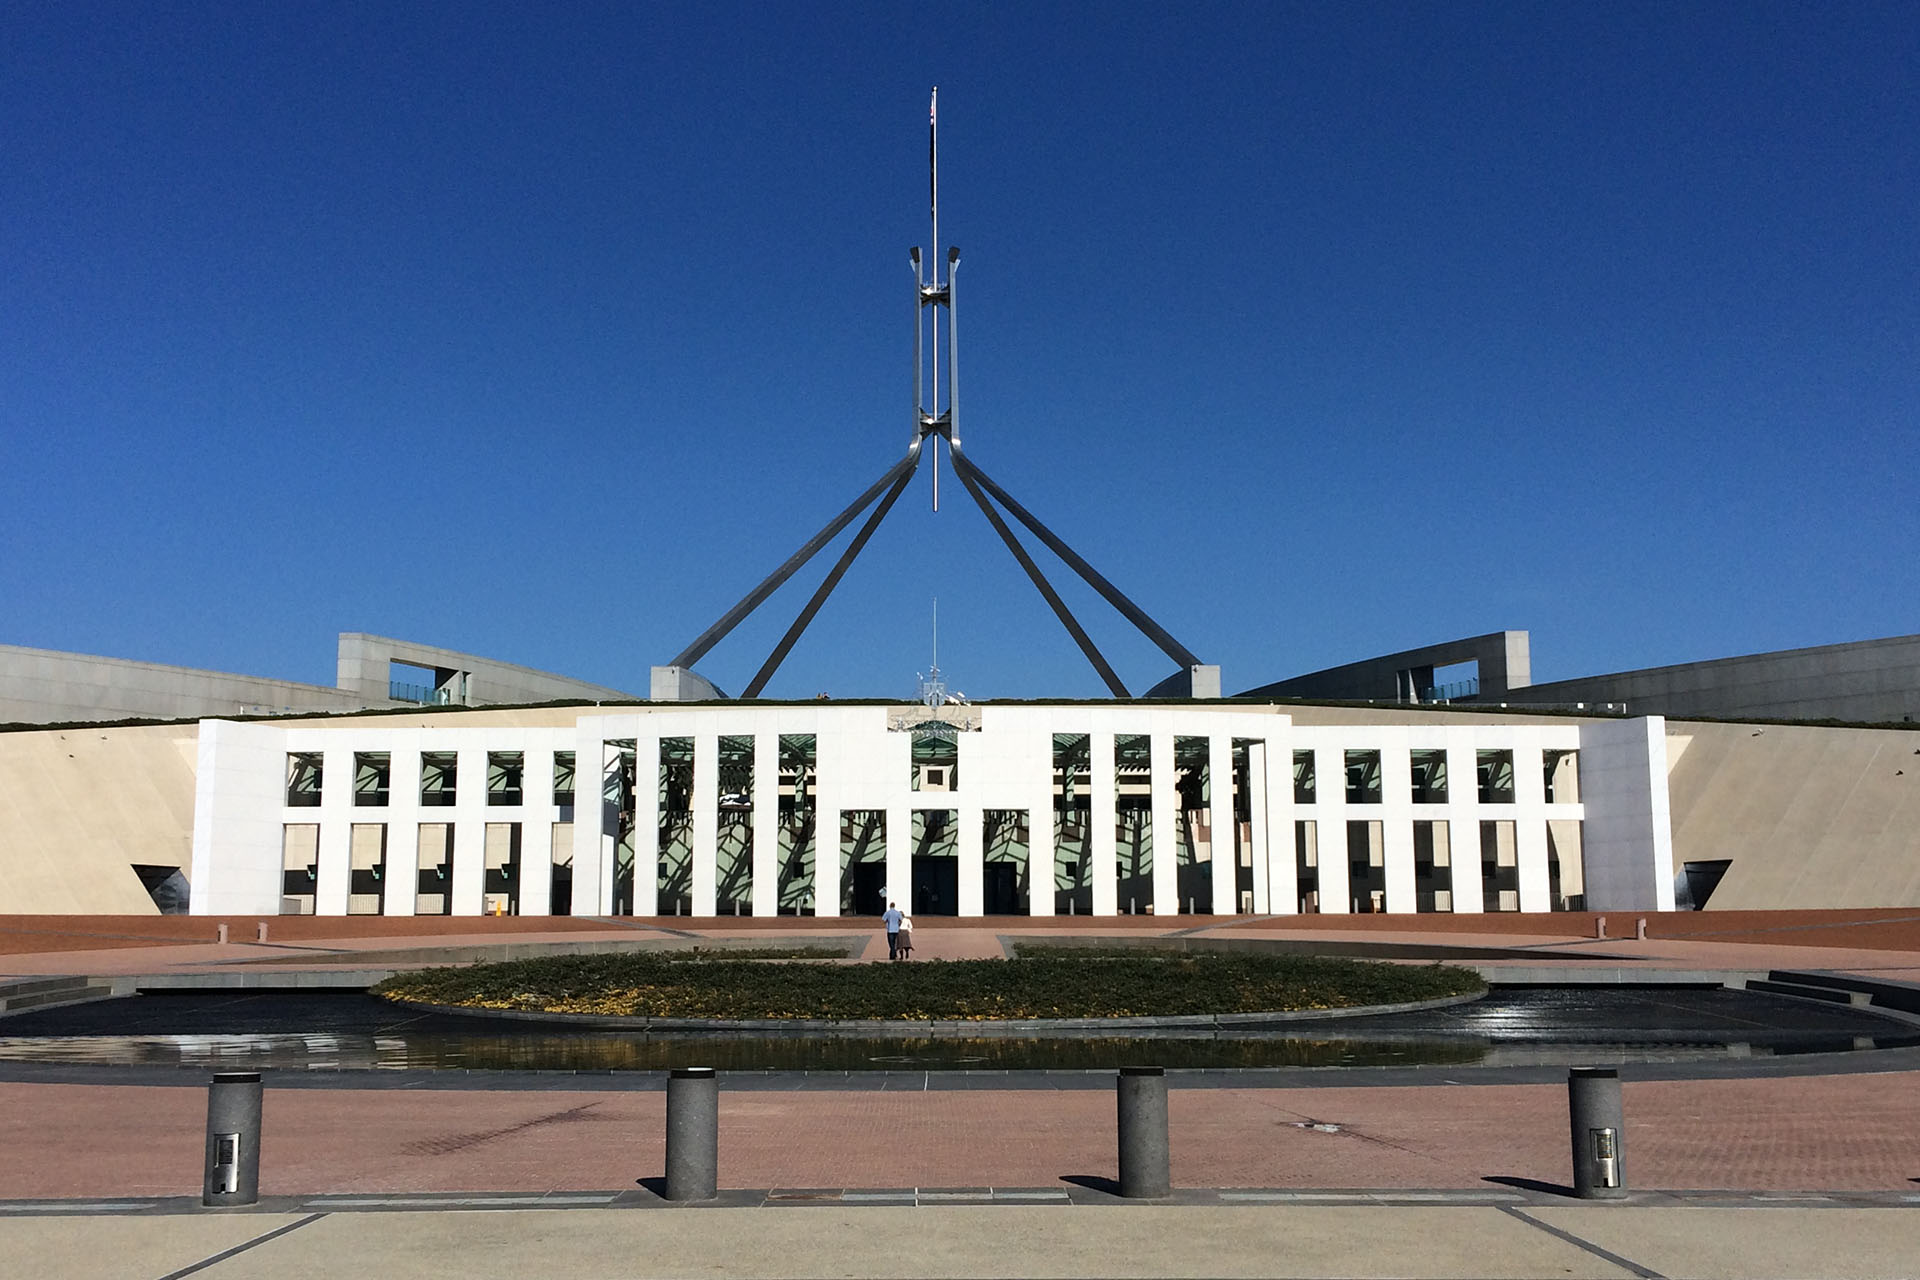 Parliament House.